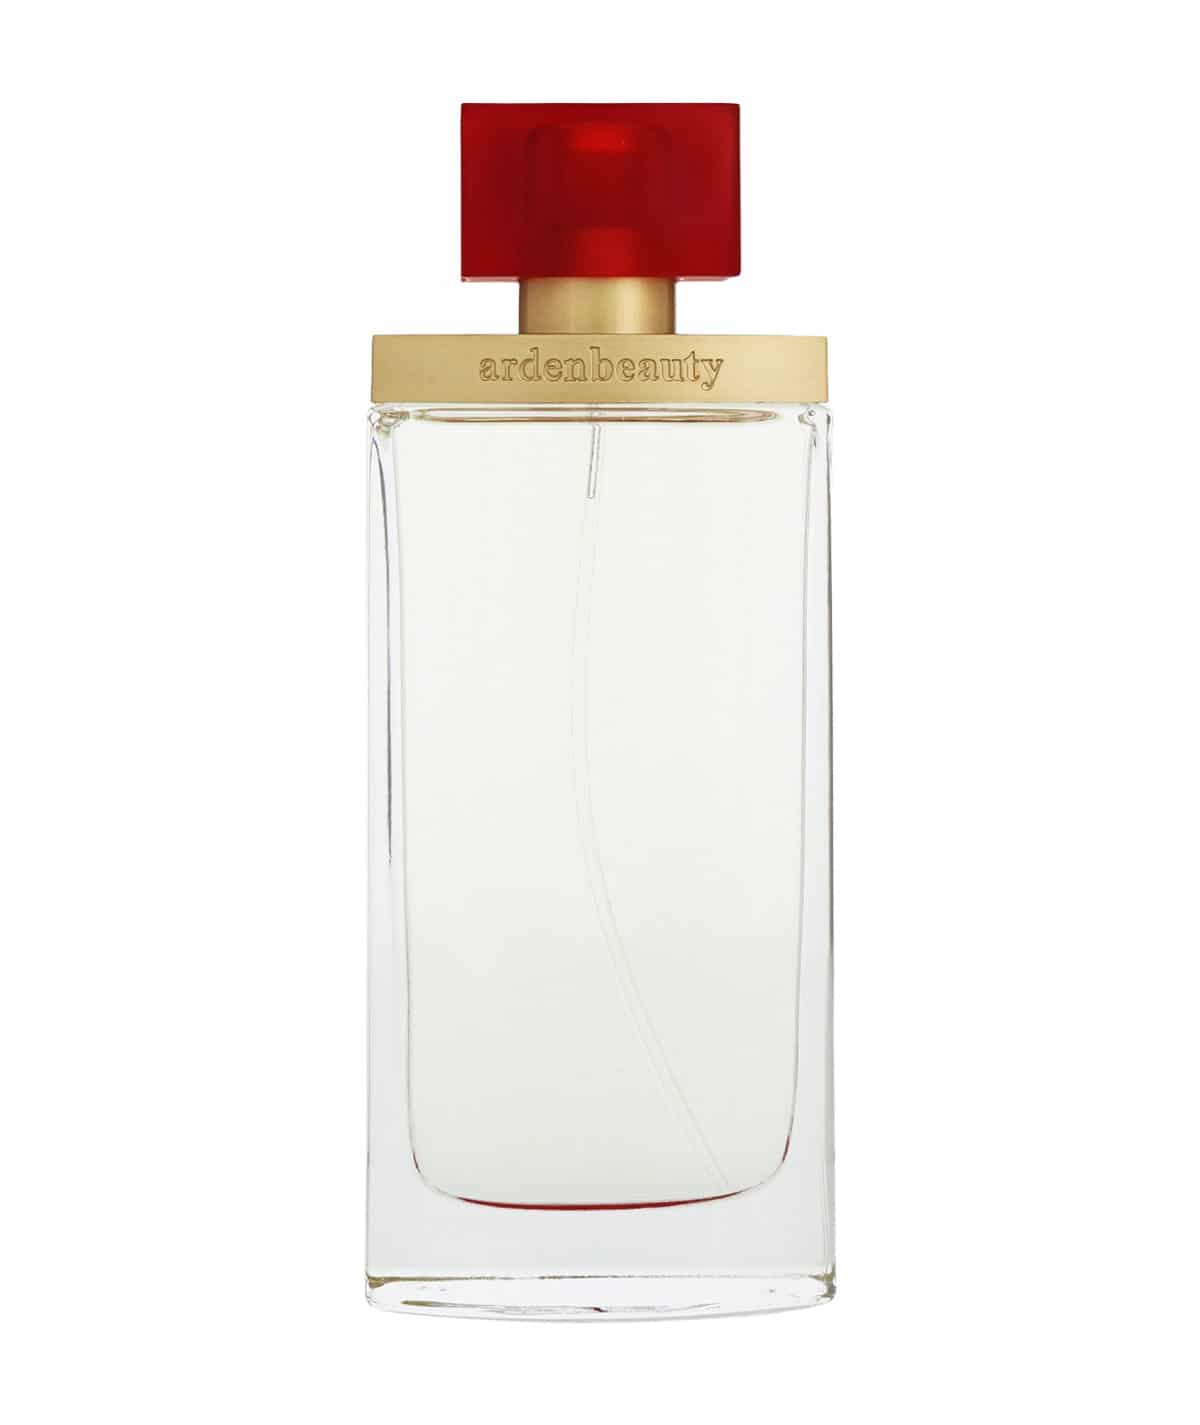 Best Elizabeth Arden Perfume - FragranceReview.com